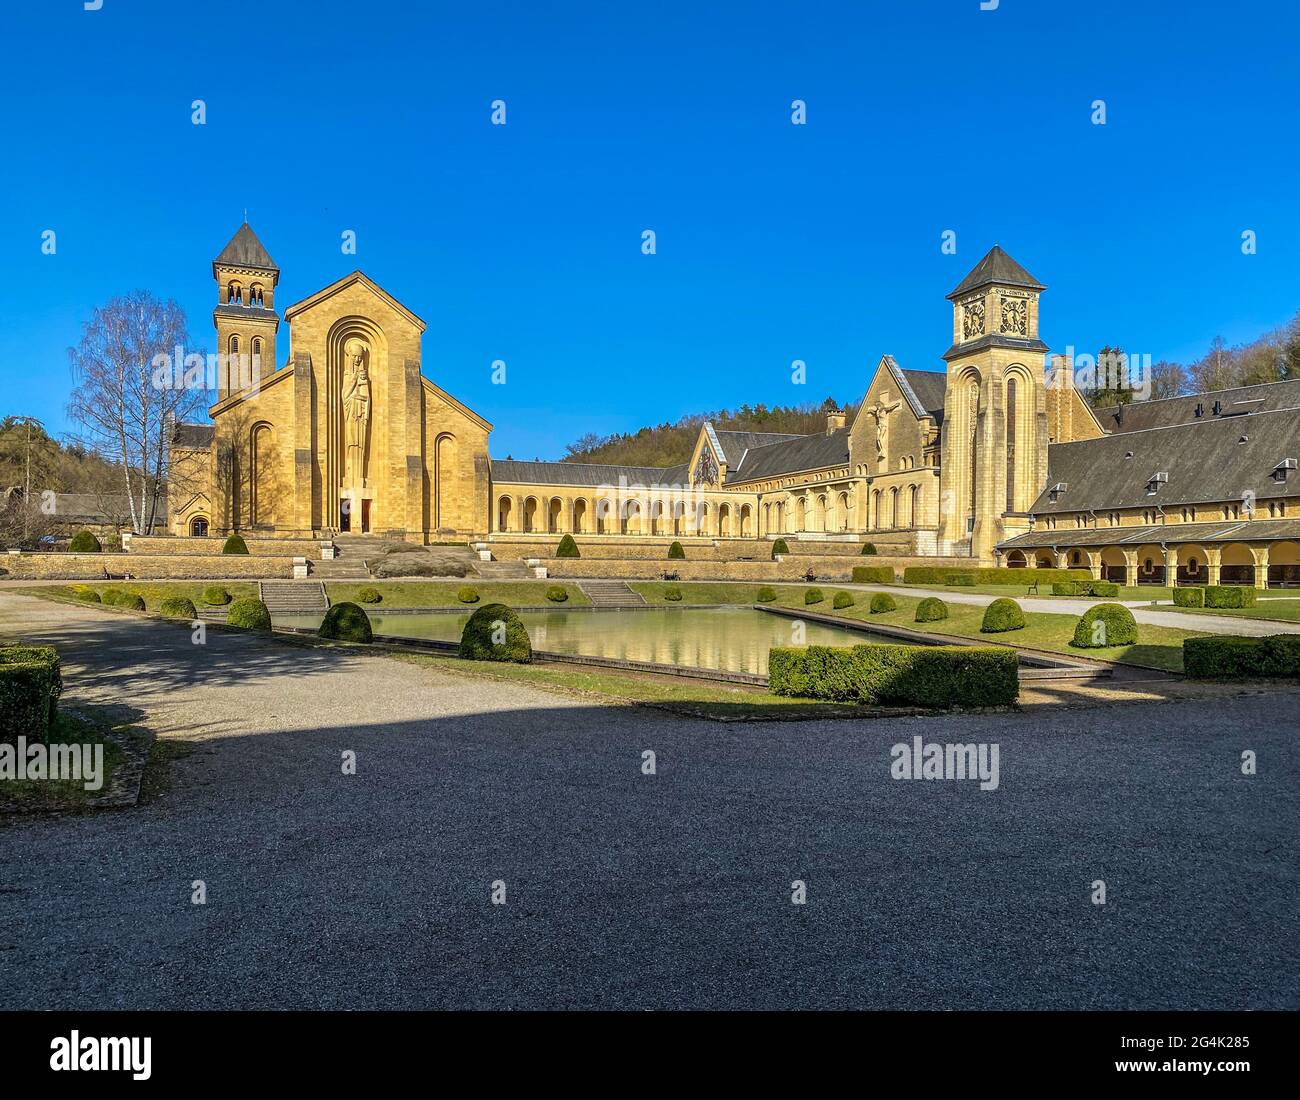 Trappist Zisterzienserabtei Orval oder Abbaye Notre-Dame d'Orval, Trappistenbier, Villers-devant-Orval, Luxemburg, Belgien Stockfoto